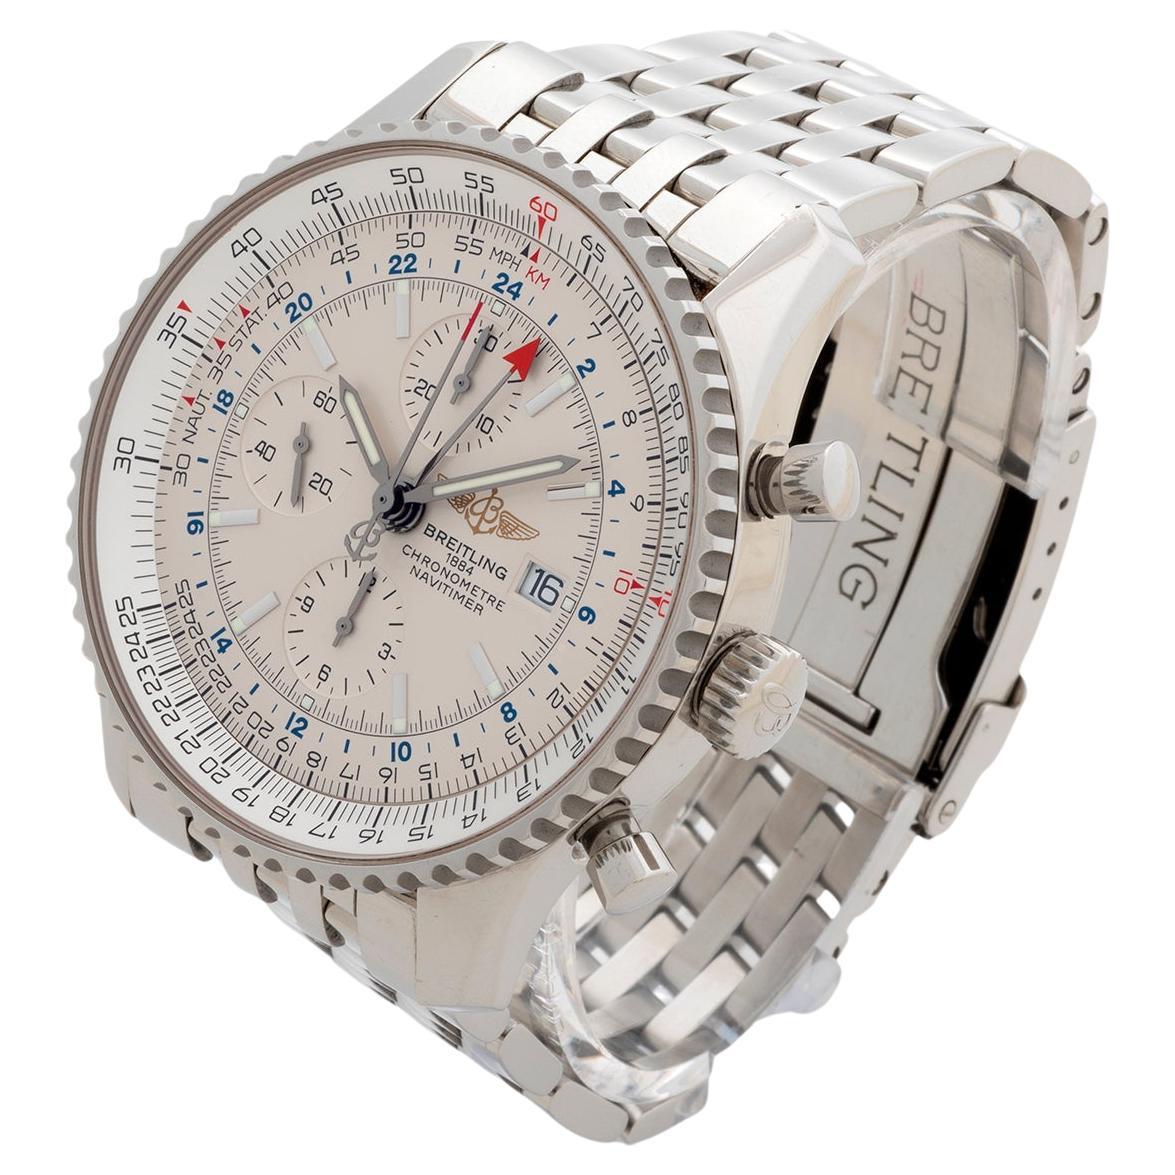 Breitling Navitimer World/ GMT Chrono Wristwatch Ref A24322, 46mm Case. C 2010